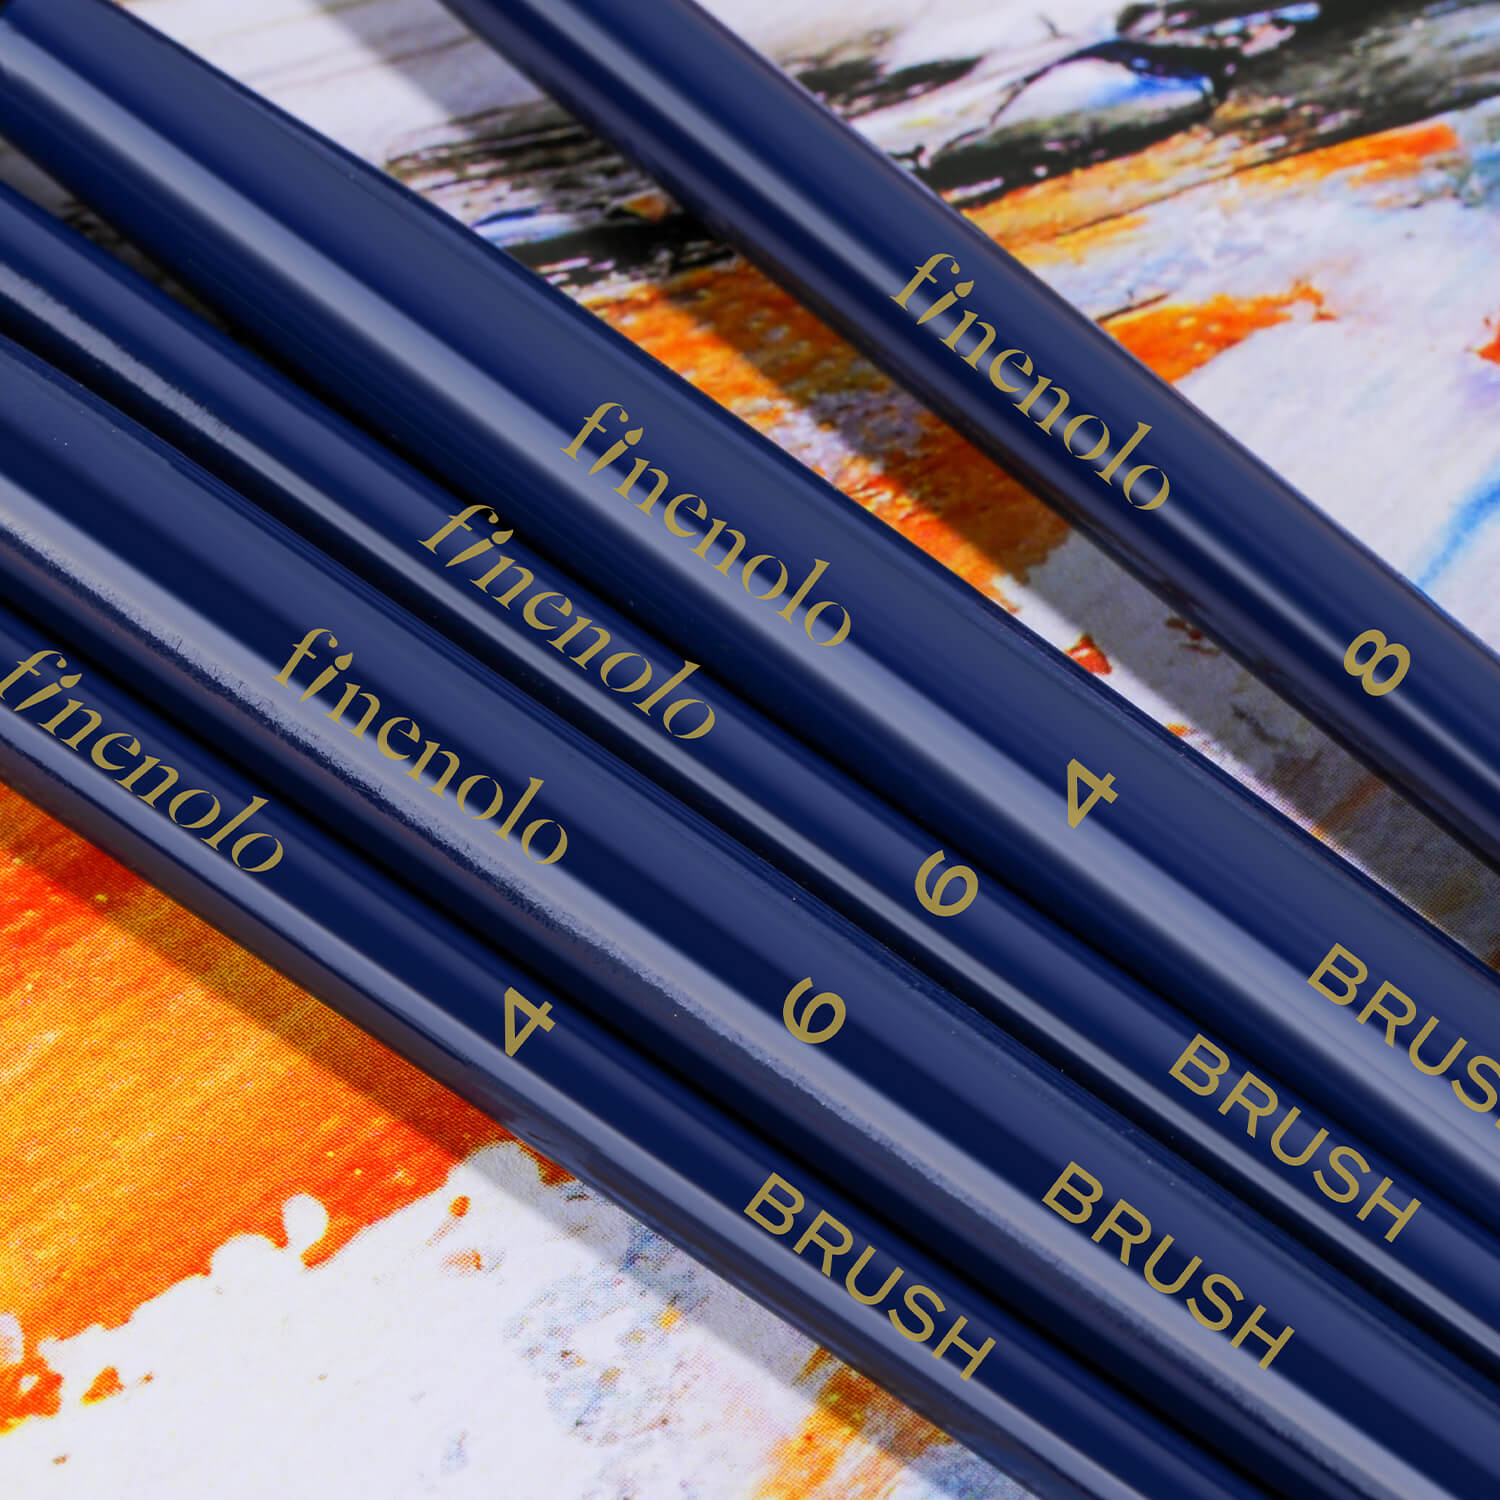 Deli-EC277 Brush Set-watercolor - Deli Group Co., Ltd.